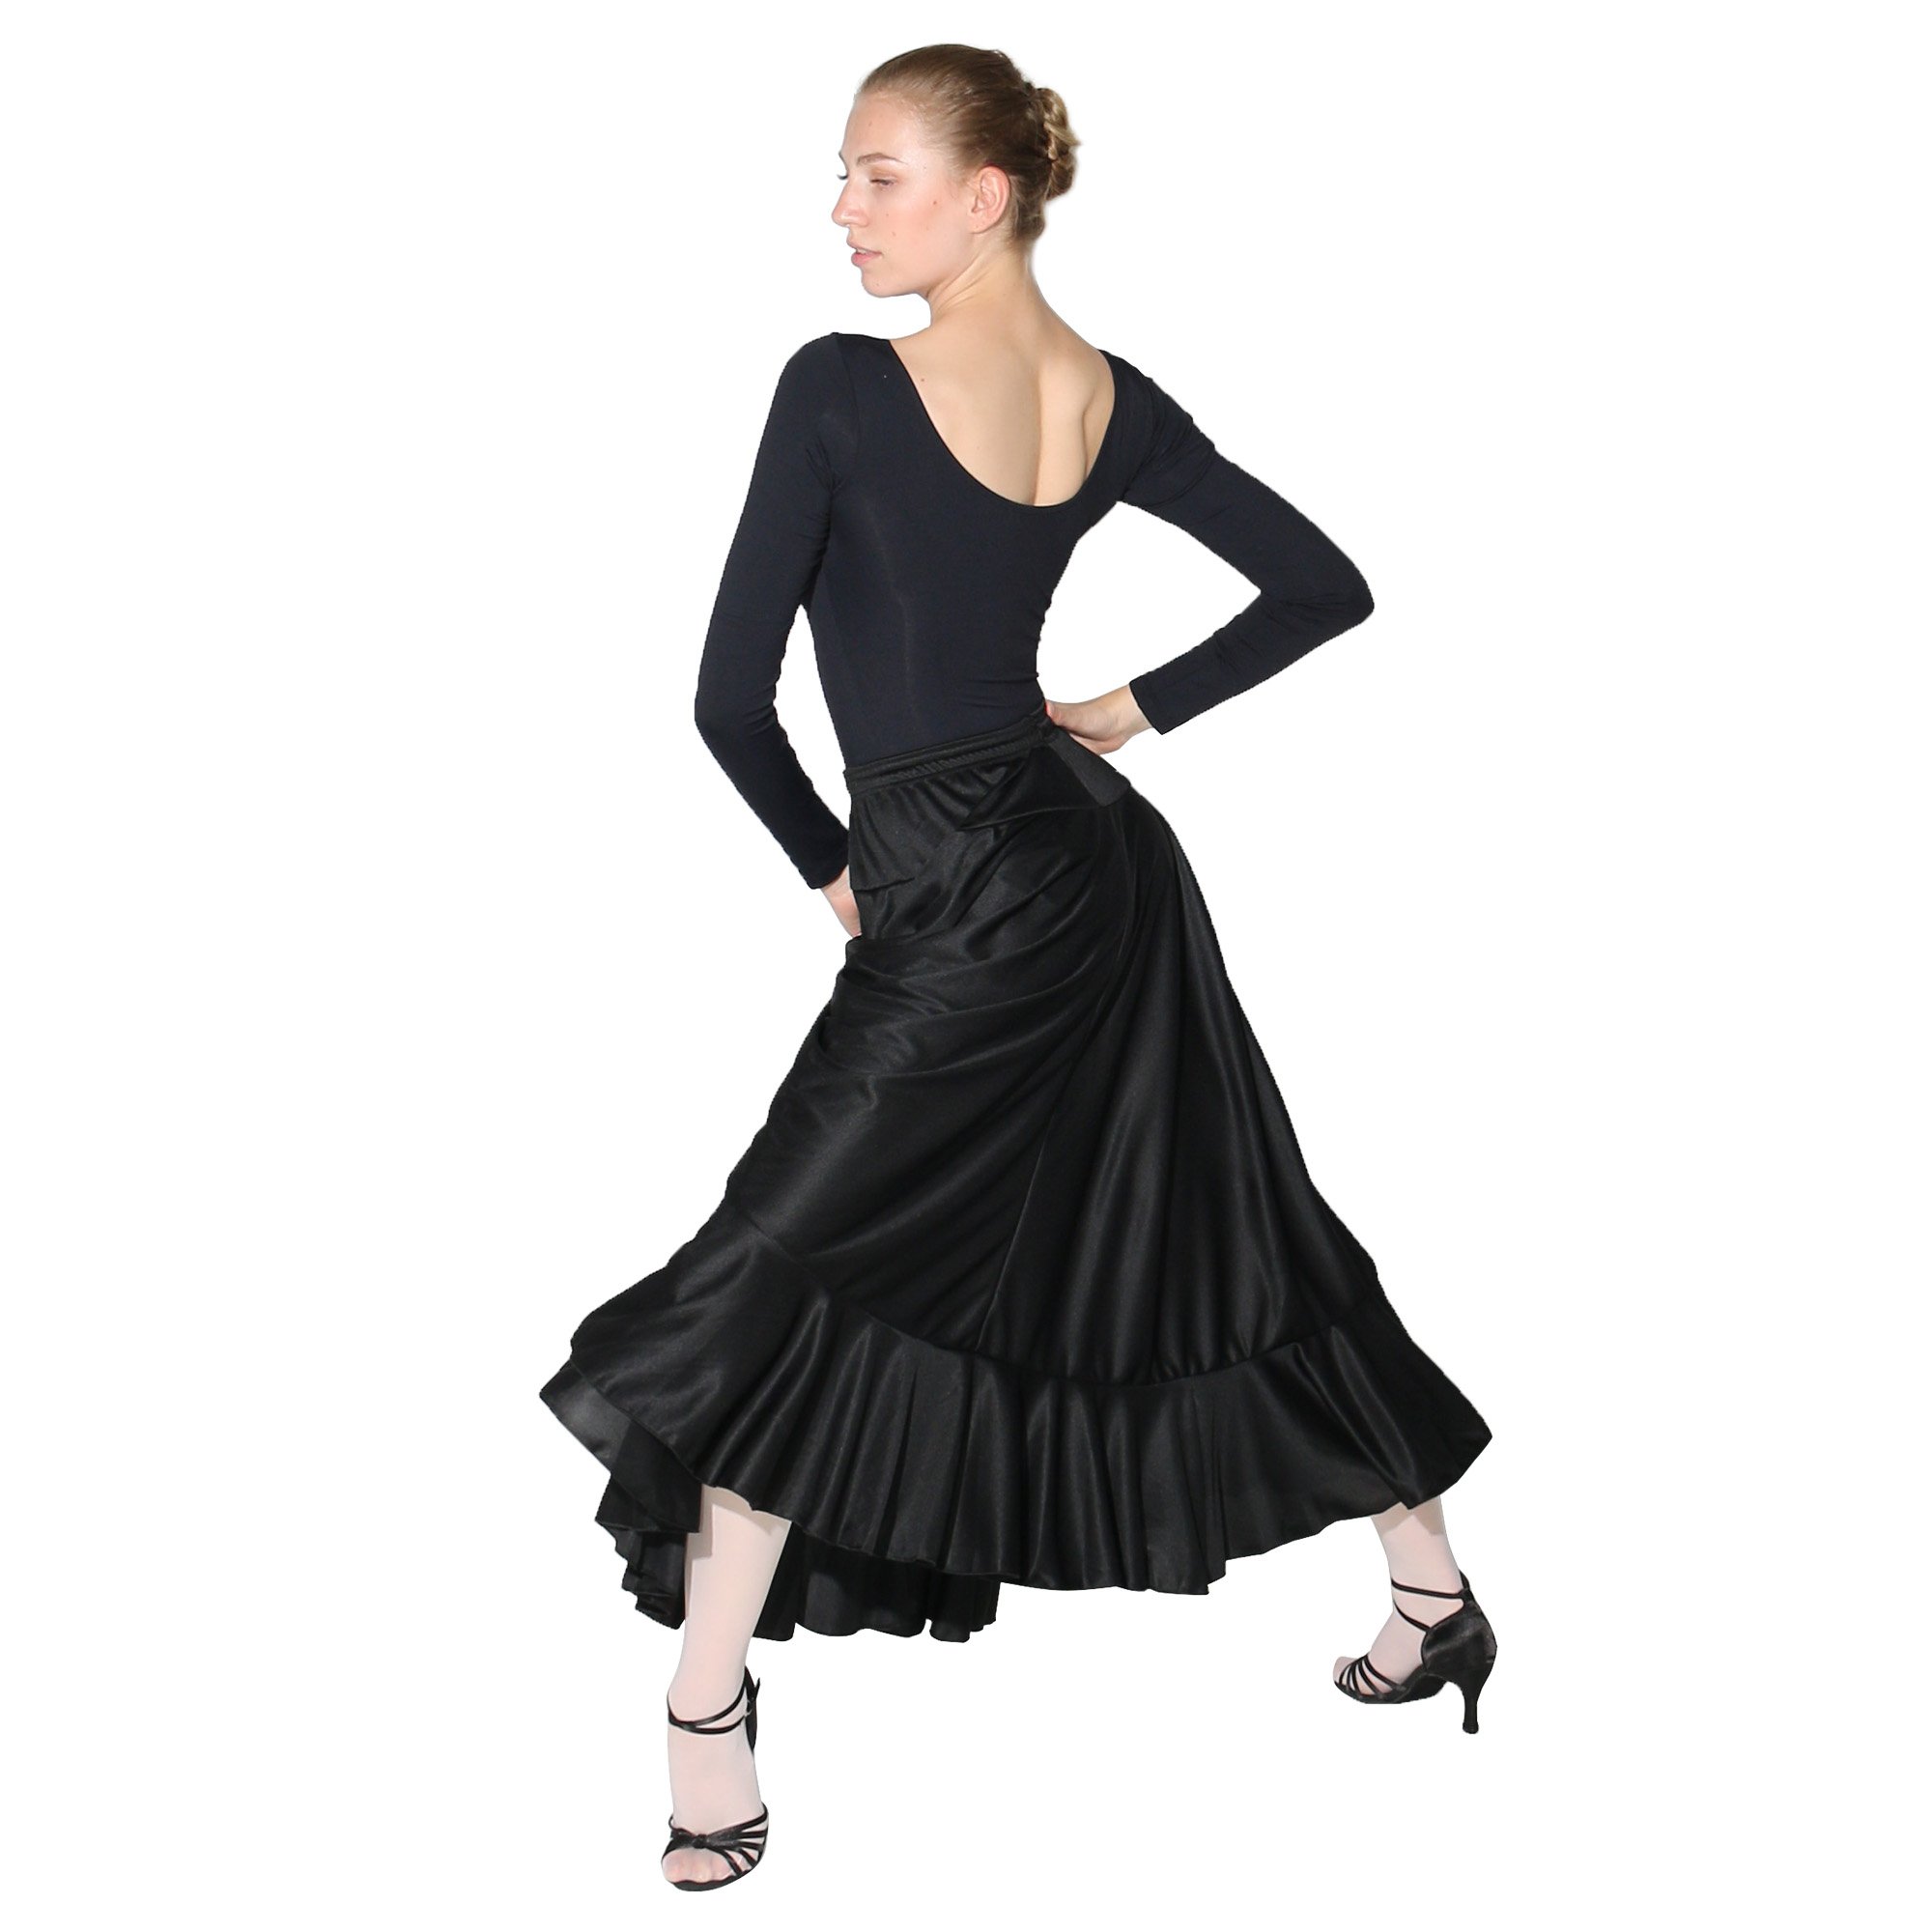 Danzcue Full Circle Flamenco Skirt - Click Image to Close